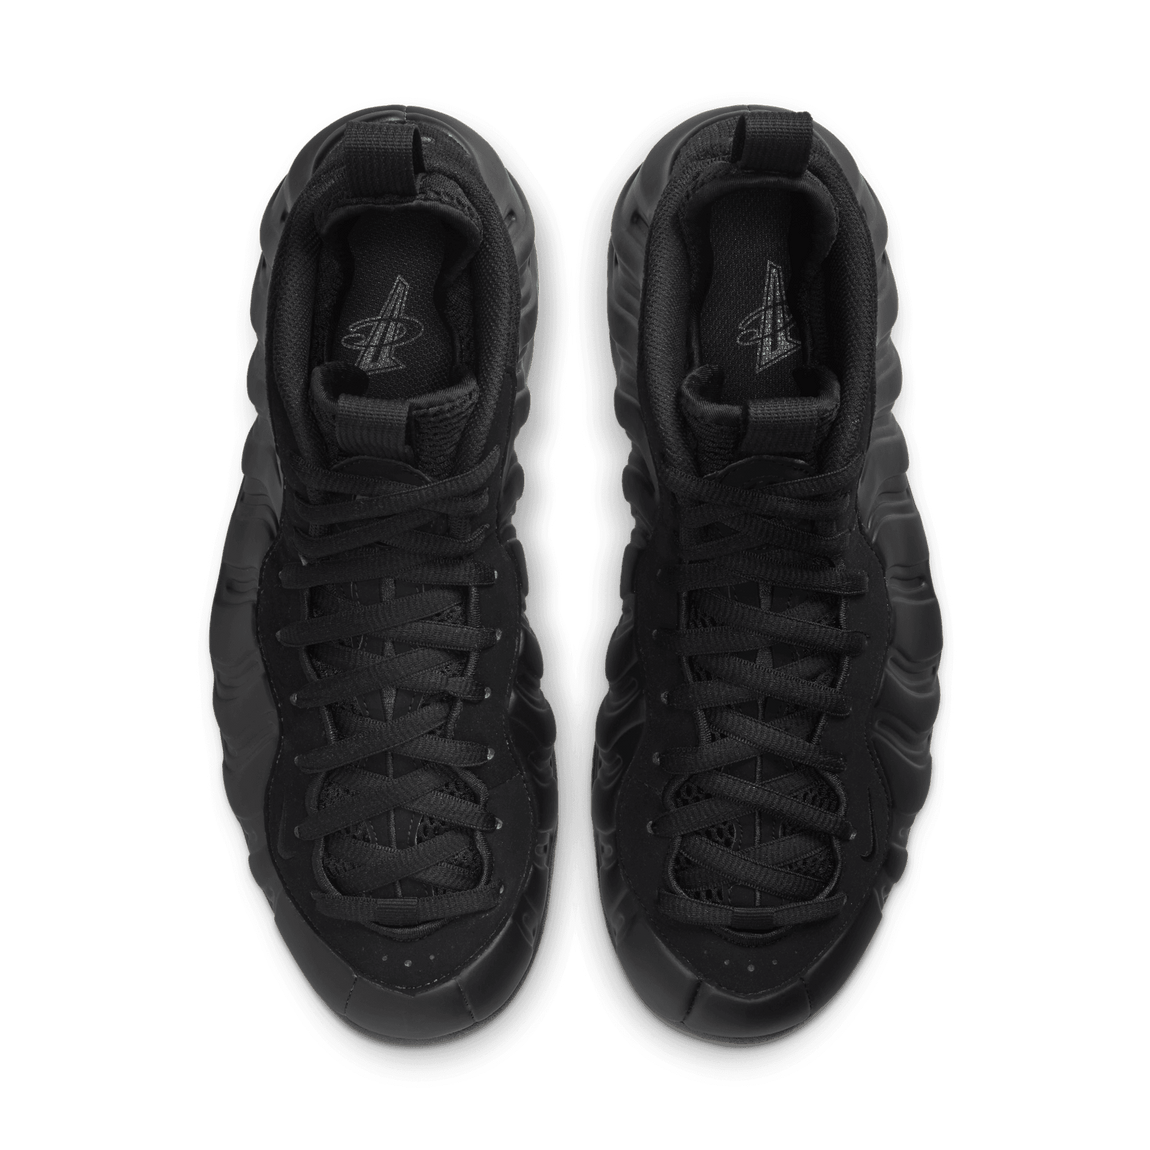 Nike Air Foamposite One (Black/Anthracite-Black) - Nike Air Foamposite One (Black/Anthracite-Black) - 